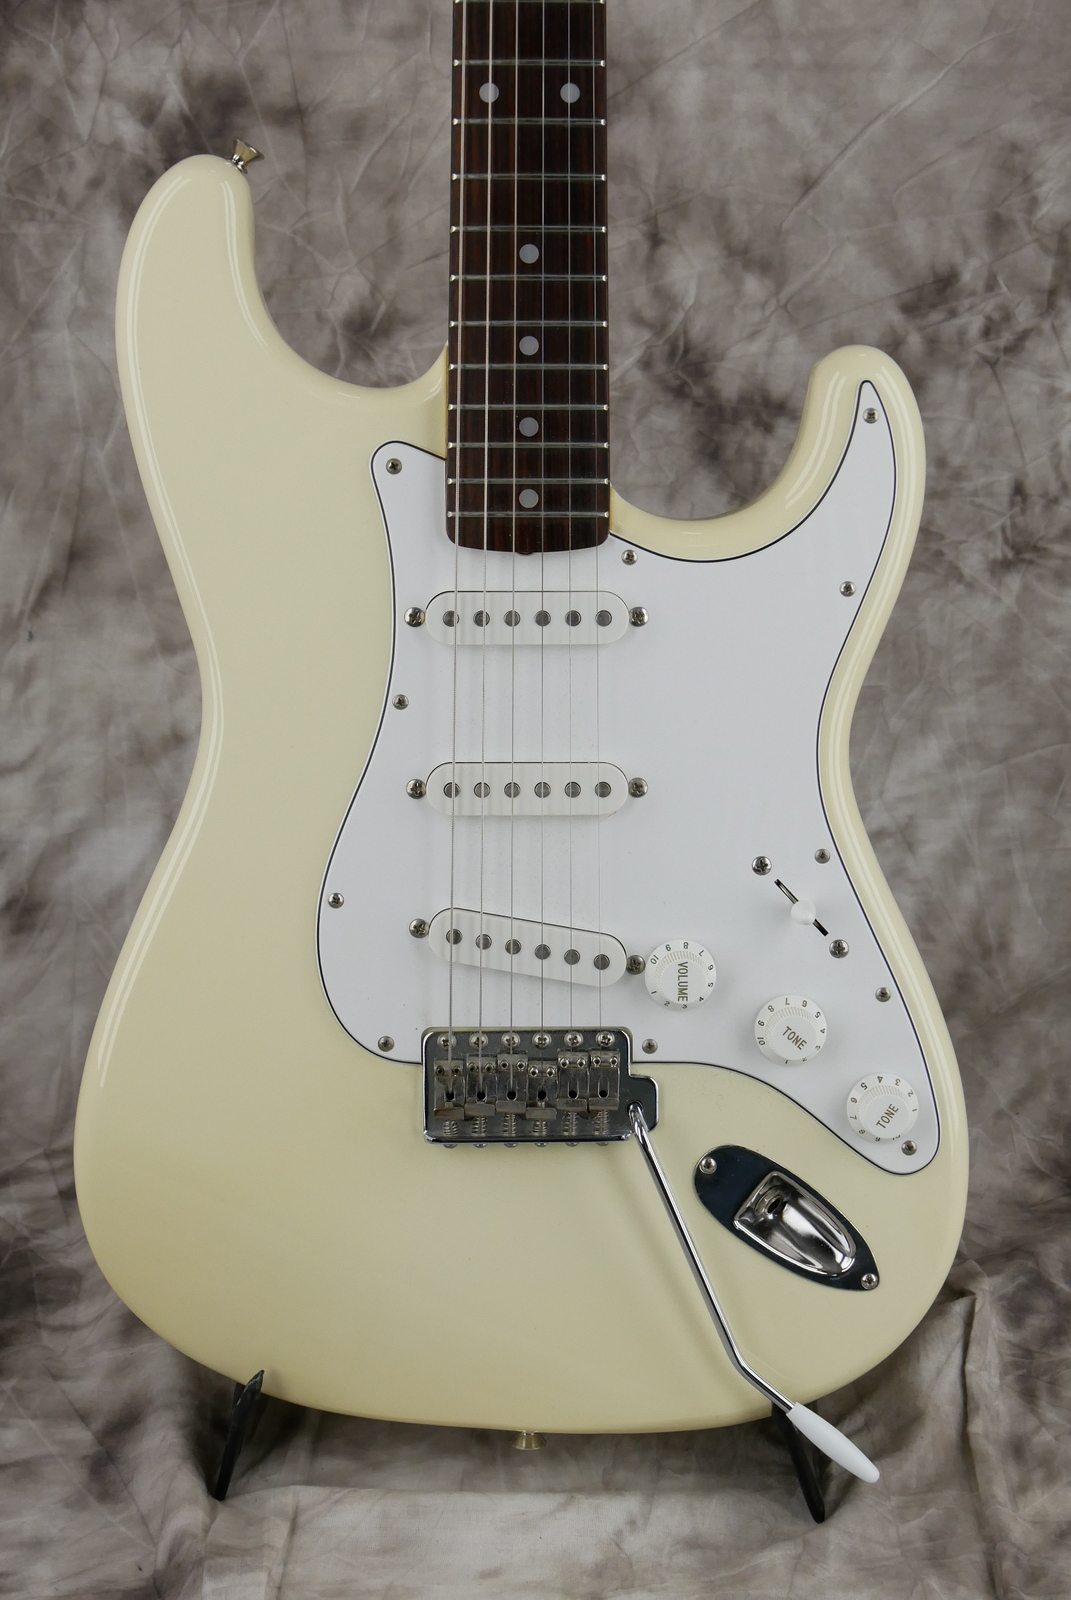 img/vintage/5375/Fender_Stratocaster_Squier_series_Japan_olympic_white_1993-003.JPG